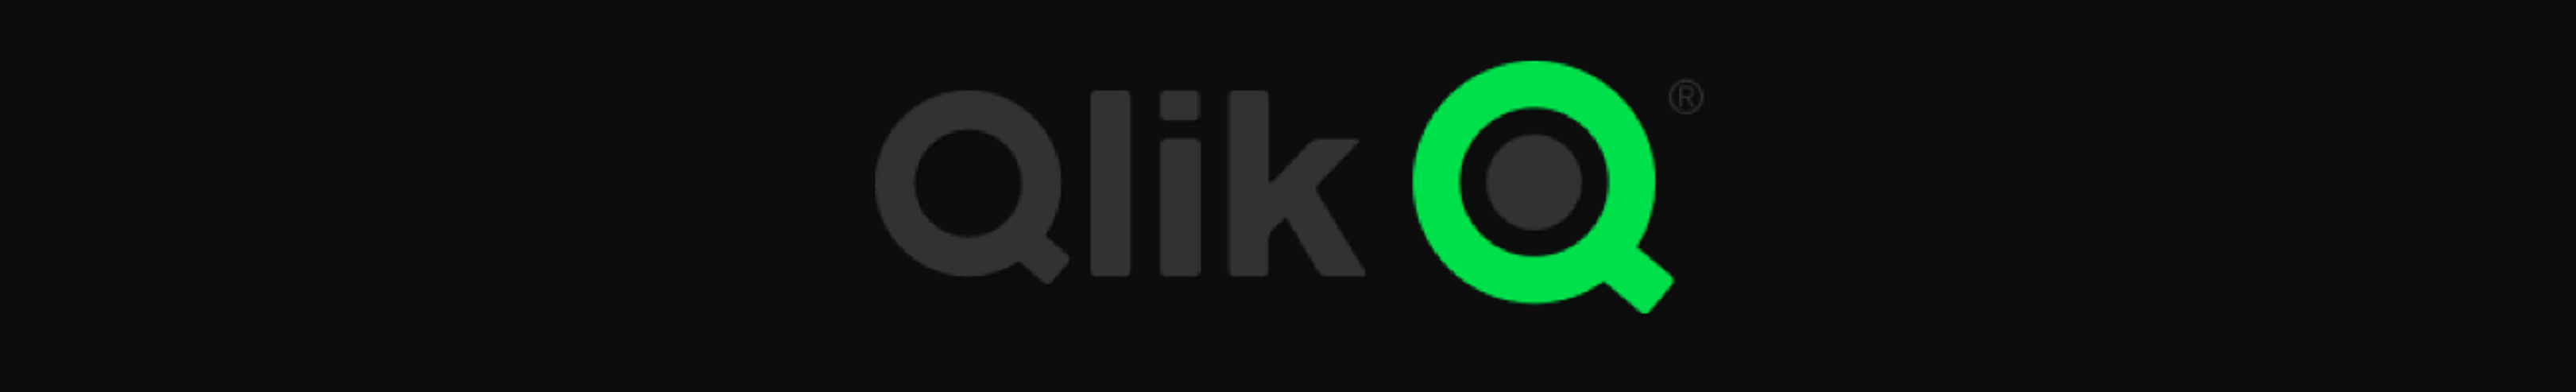 QlikView Logo - Top 10 Data Analytics Tools - Edureka